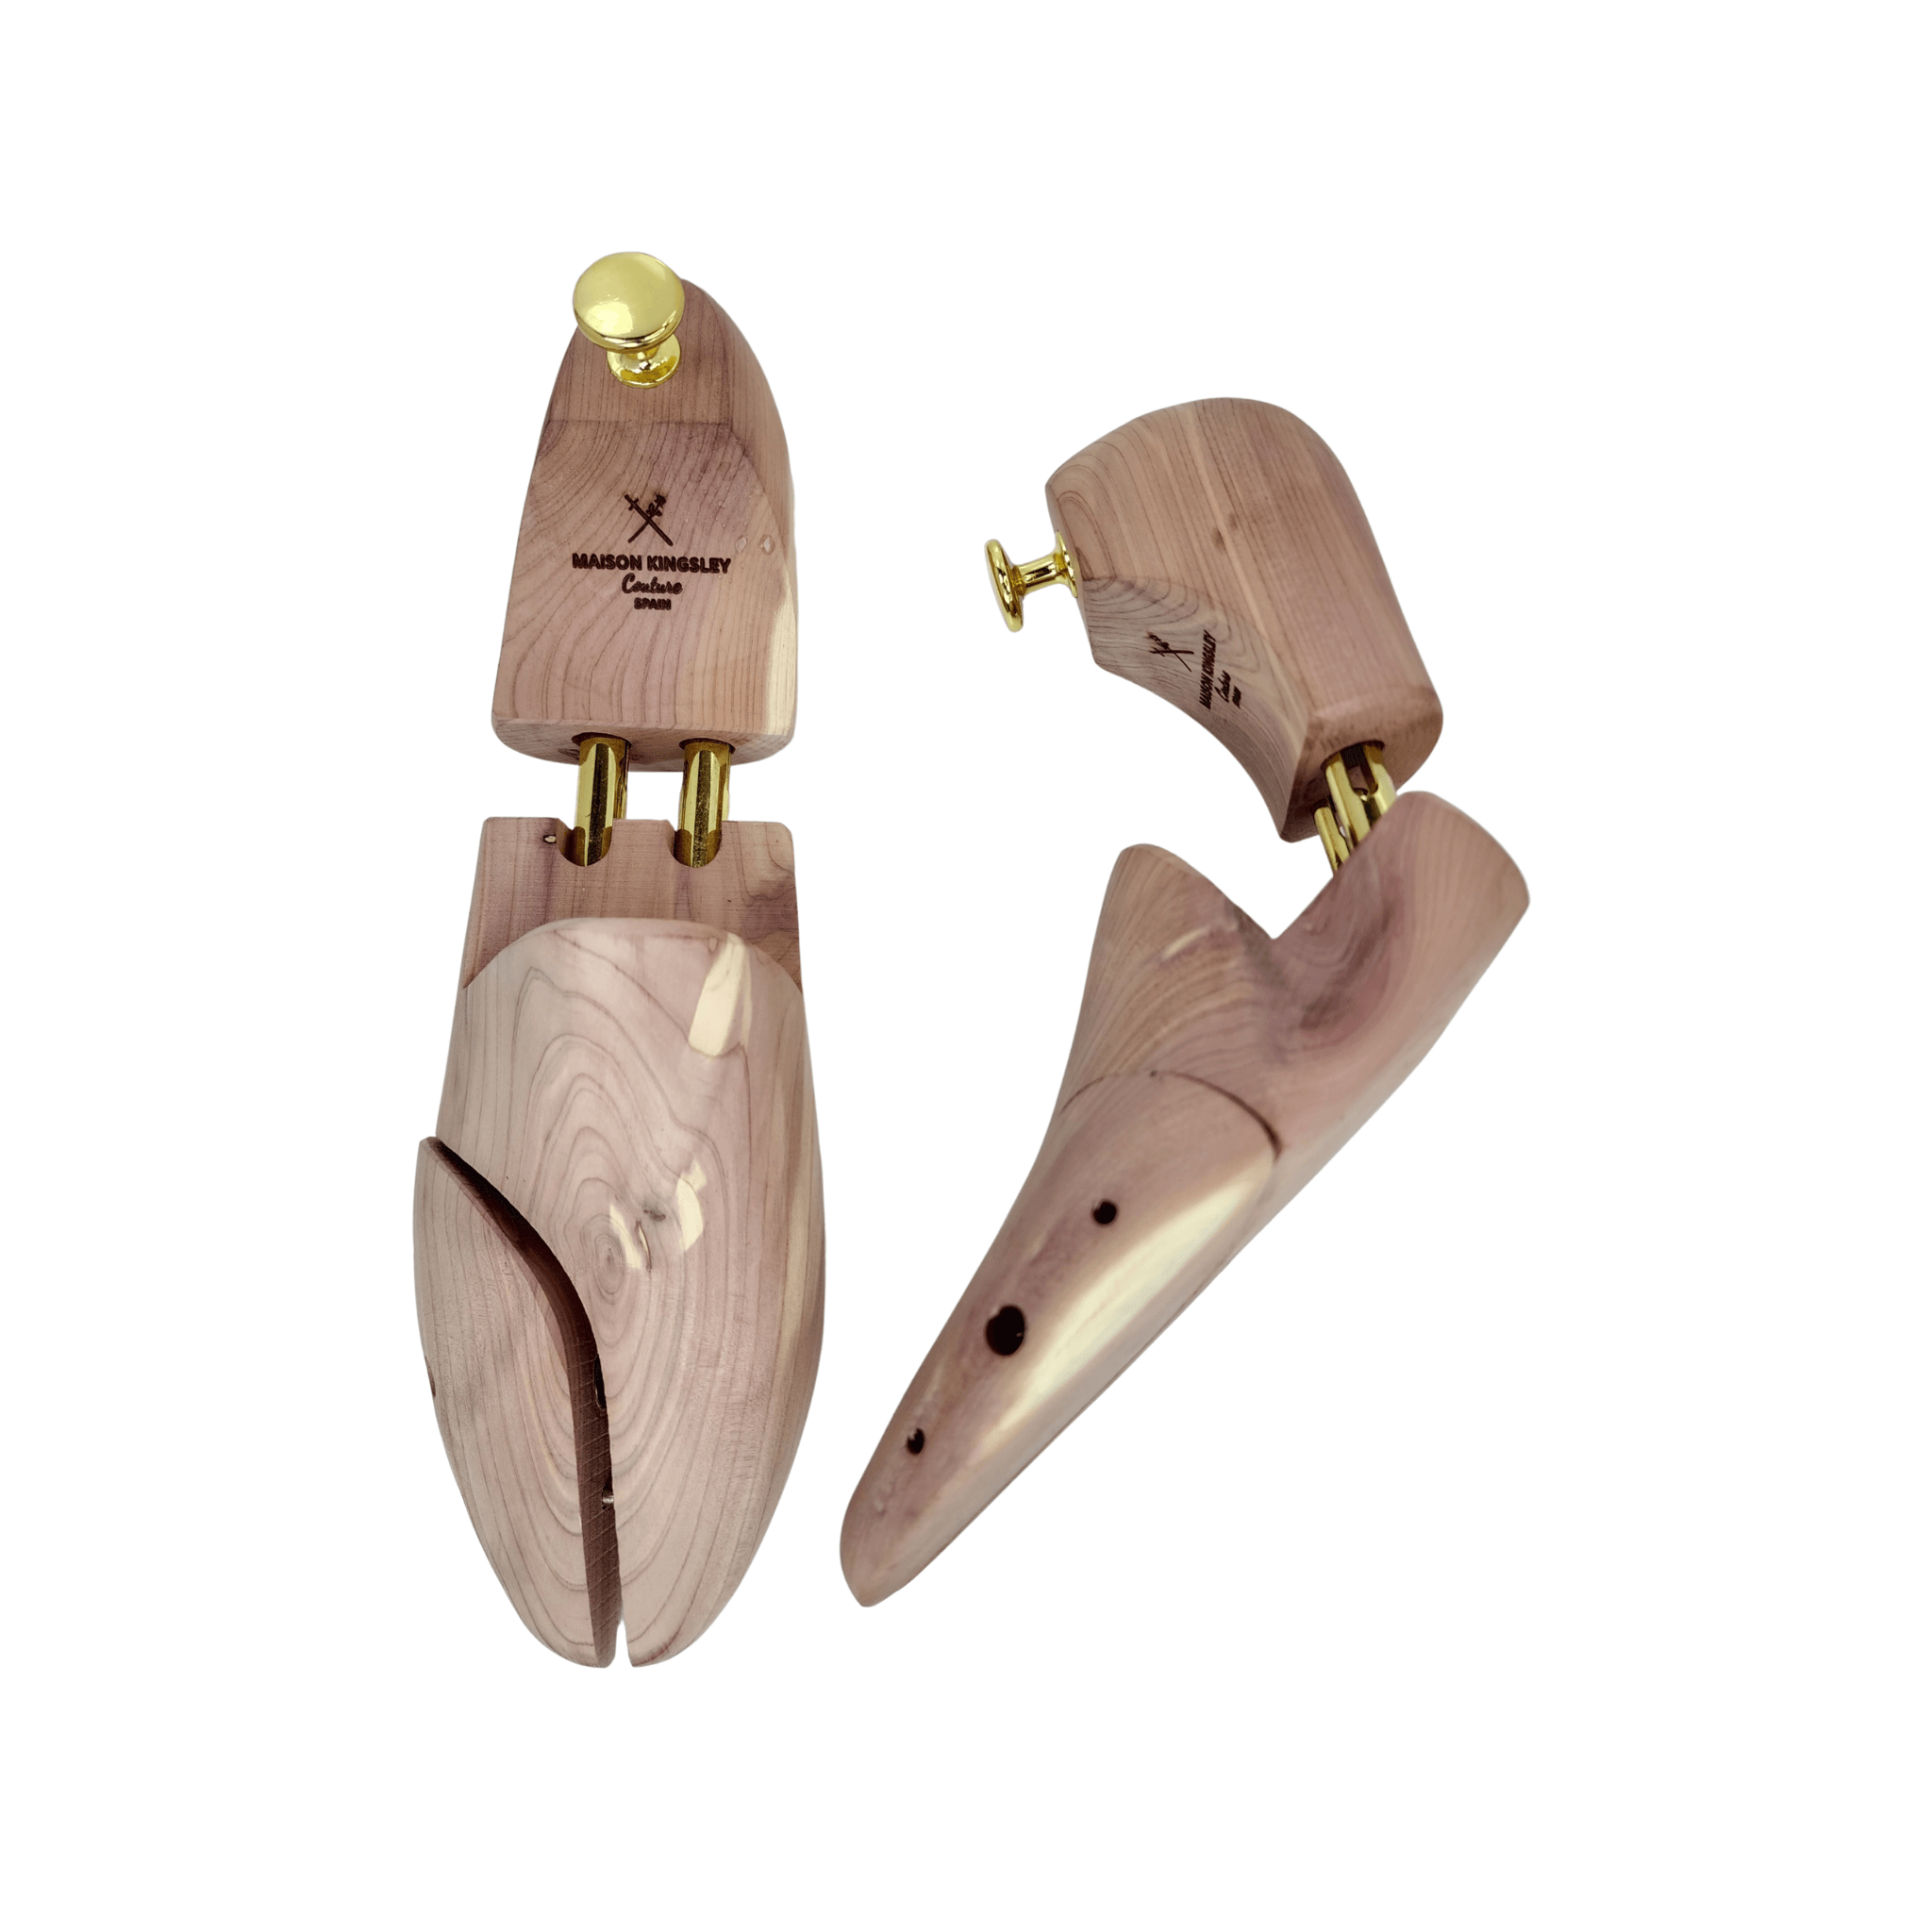 Egyptian Pharaoh Copper Garnet Chelsea Boot Laser Engraved - Maison de Kingsley Couture Harmonie et Fureur Spain